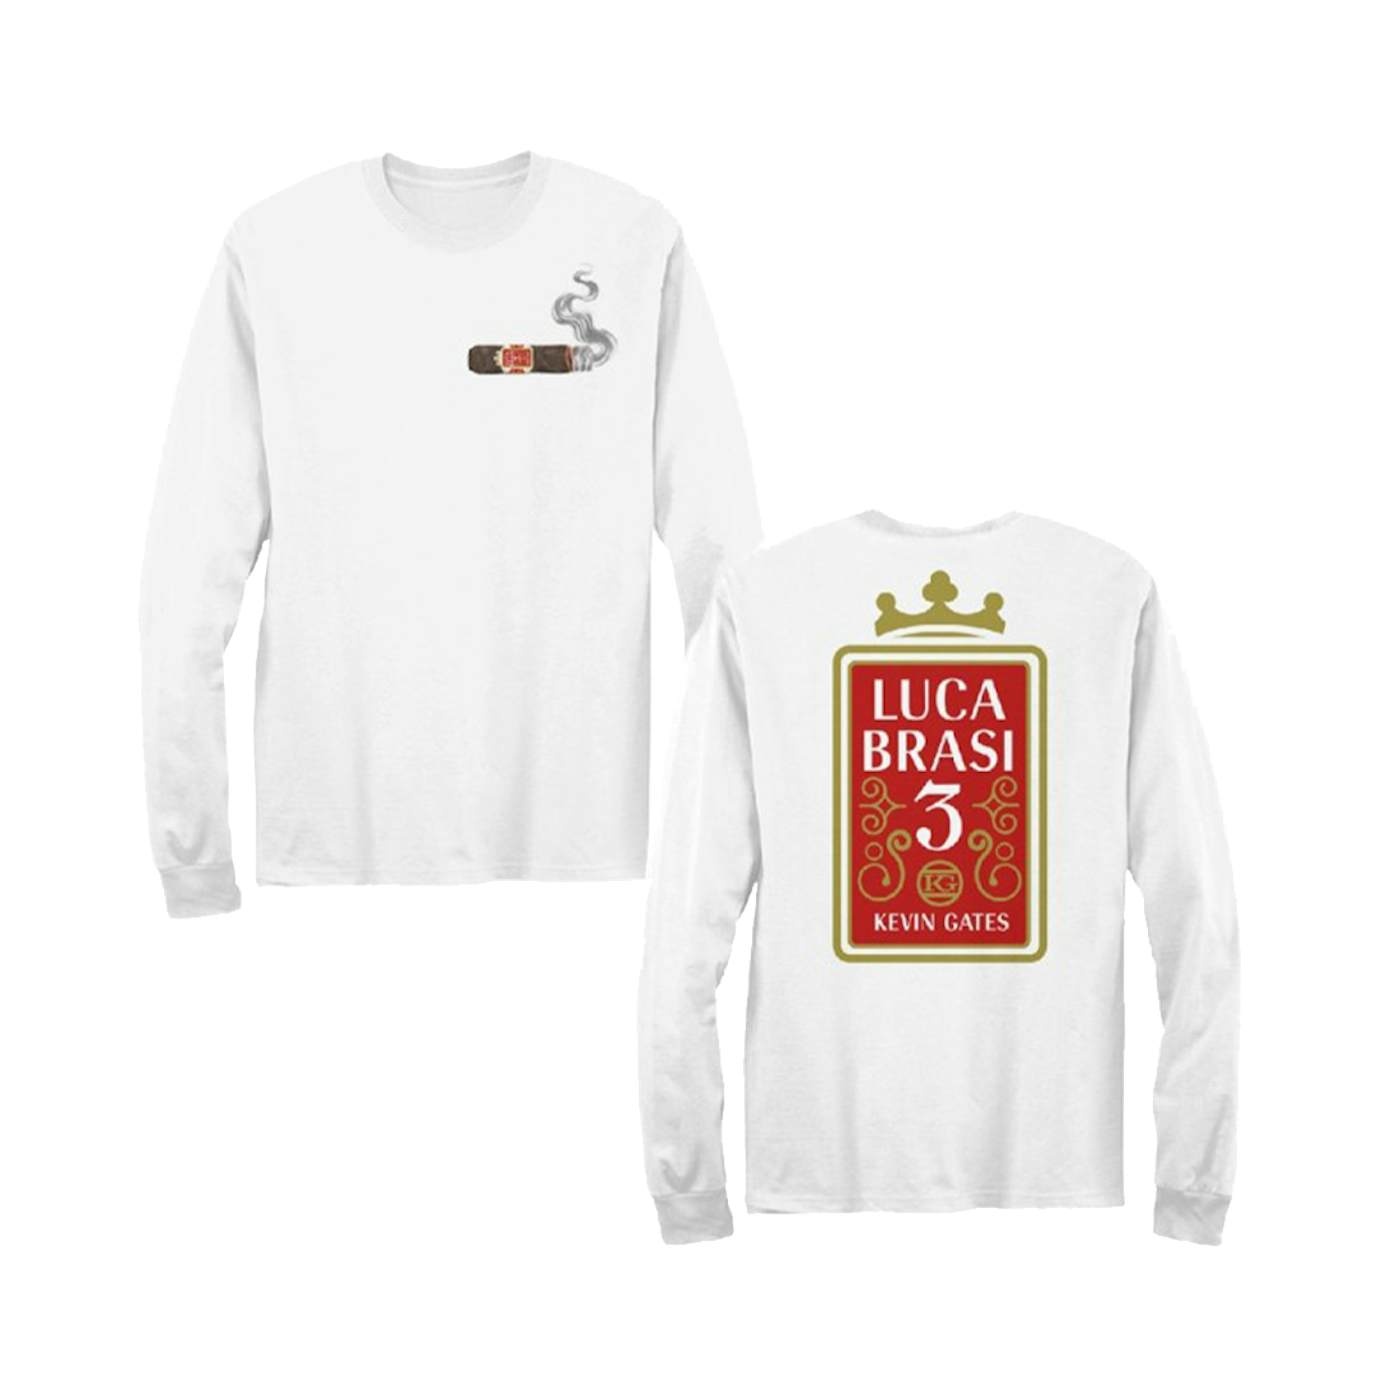 Kevin Gates Cigar Label Longsleeve T-Shirt